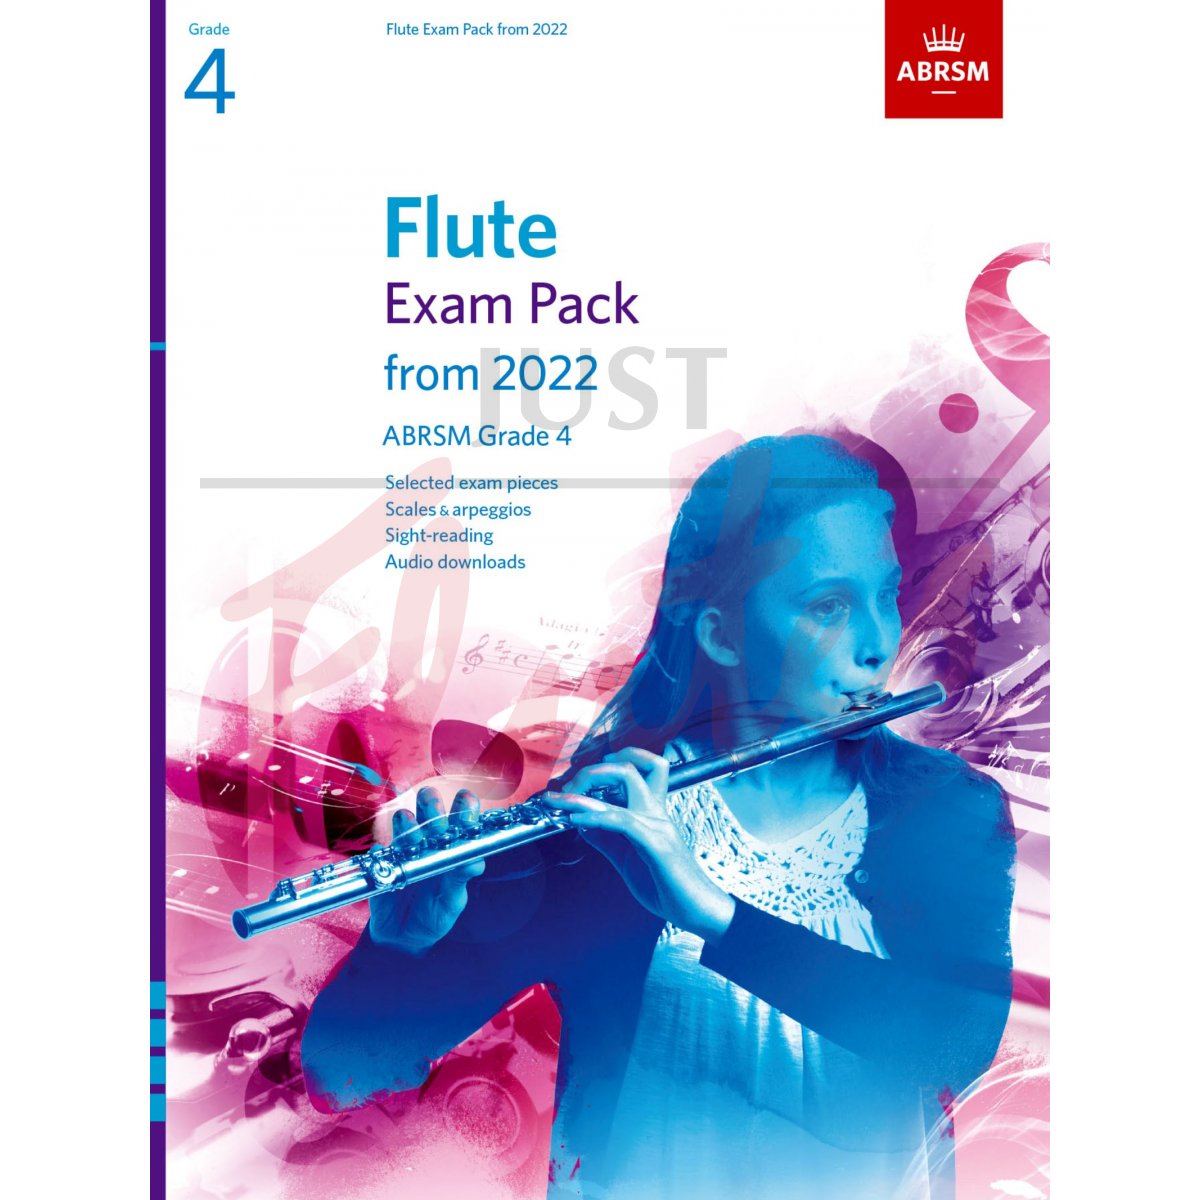 Flute Exam Pack from 2022 Grade 4